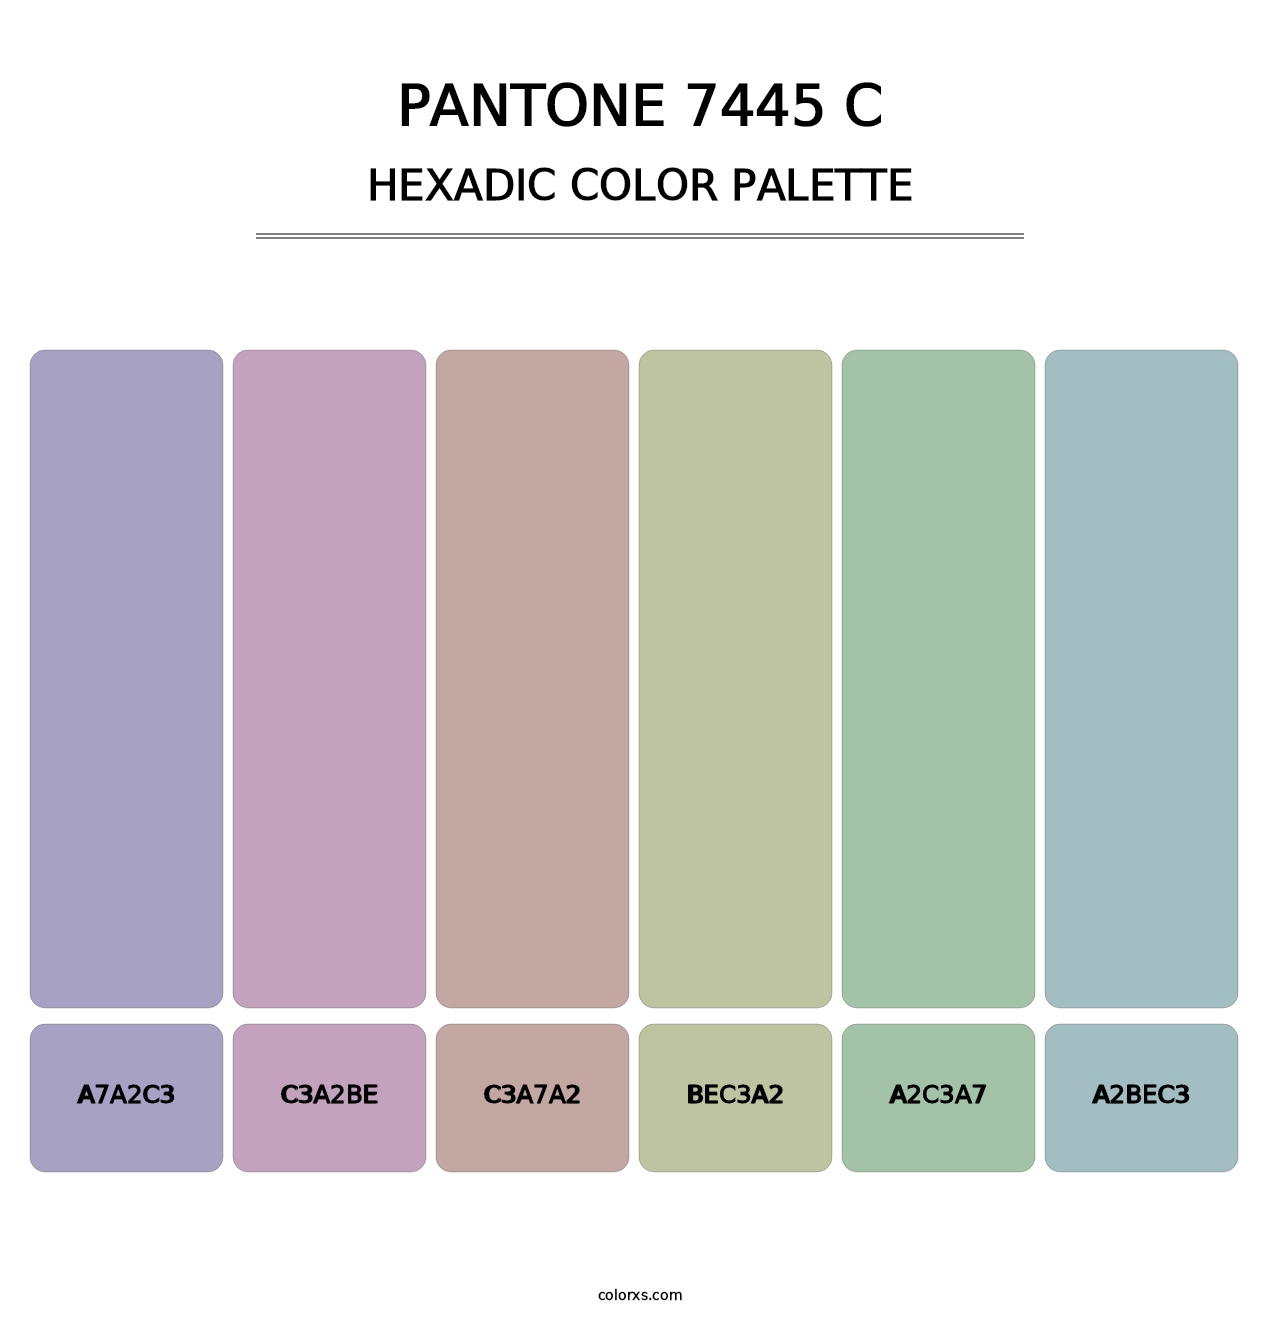 PANTONE 7445 C - Hexadic Color Palette